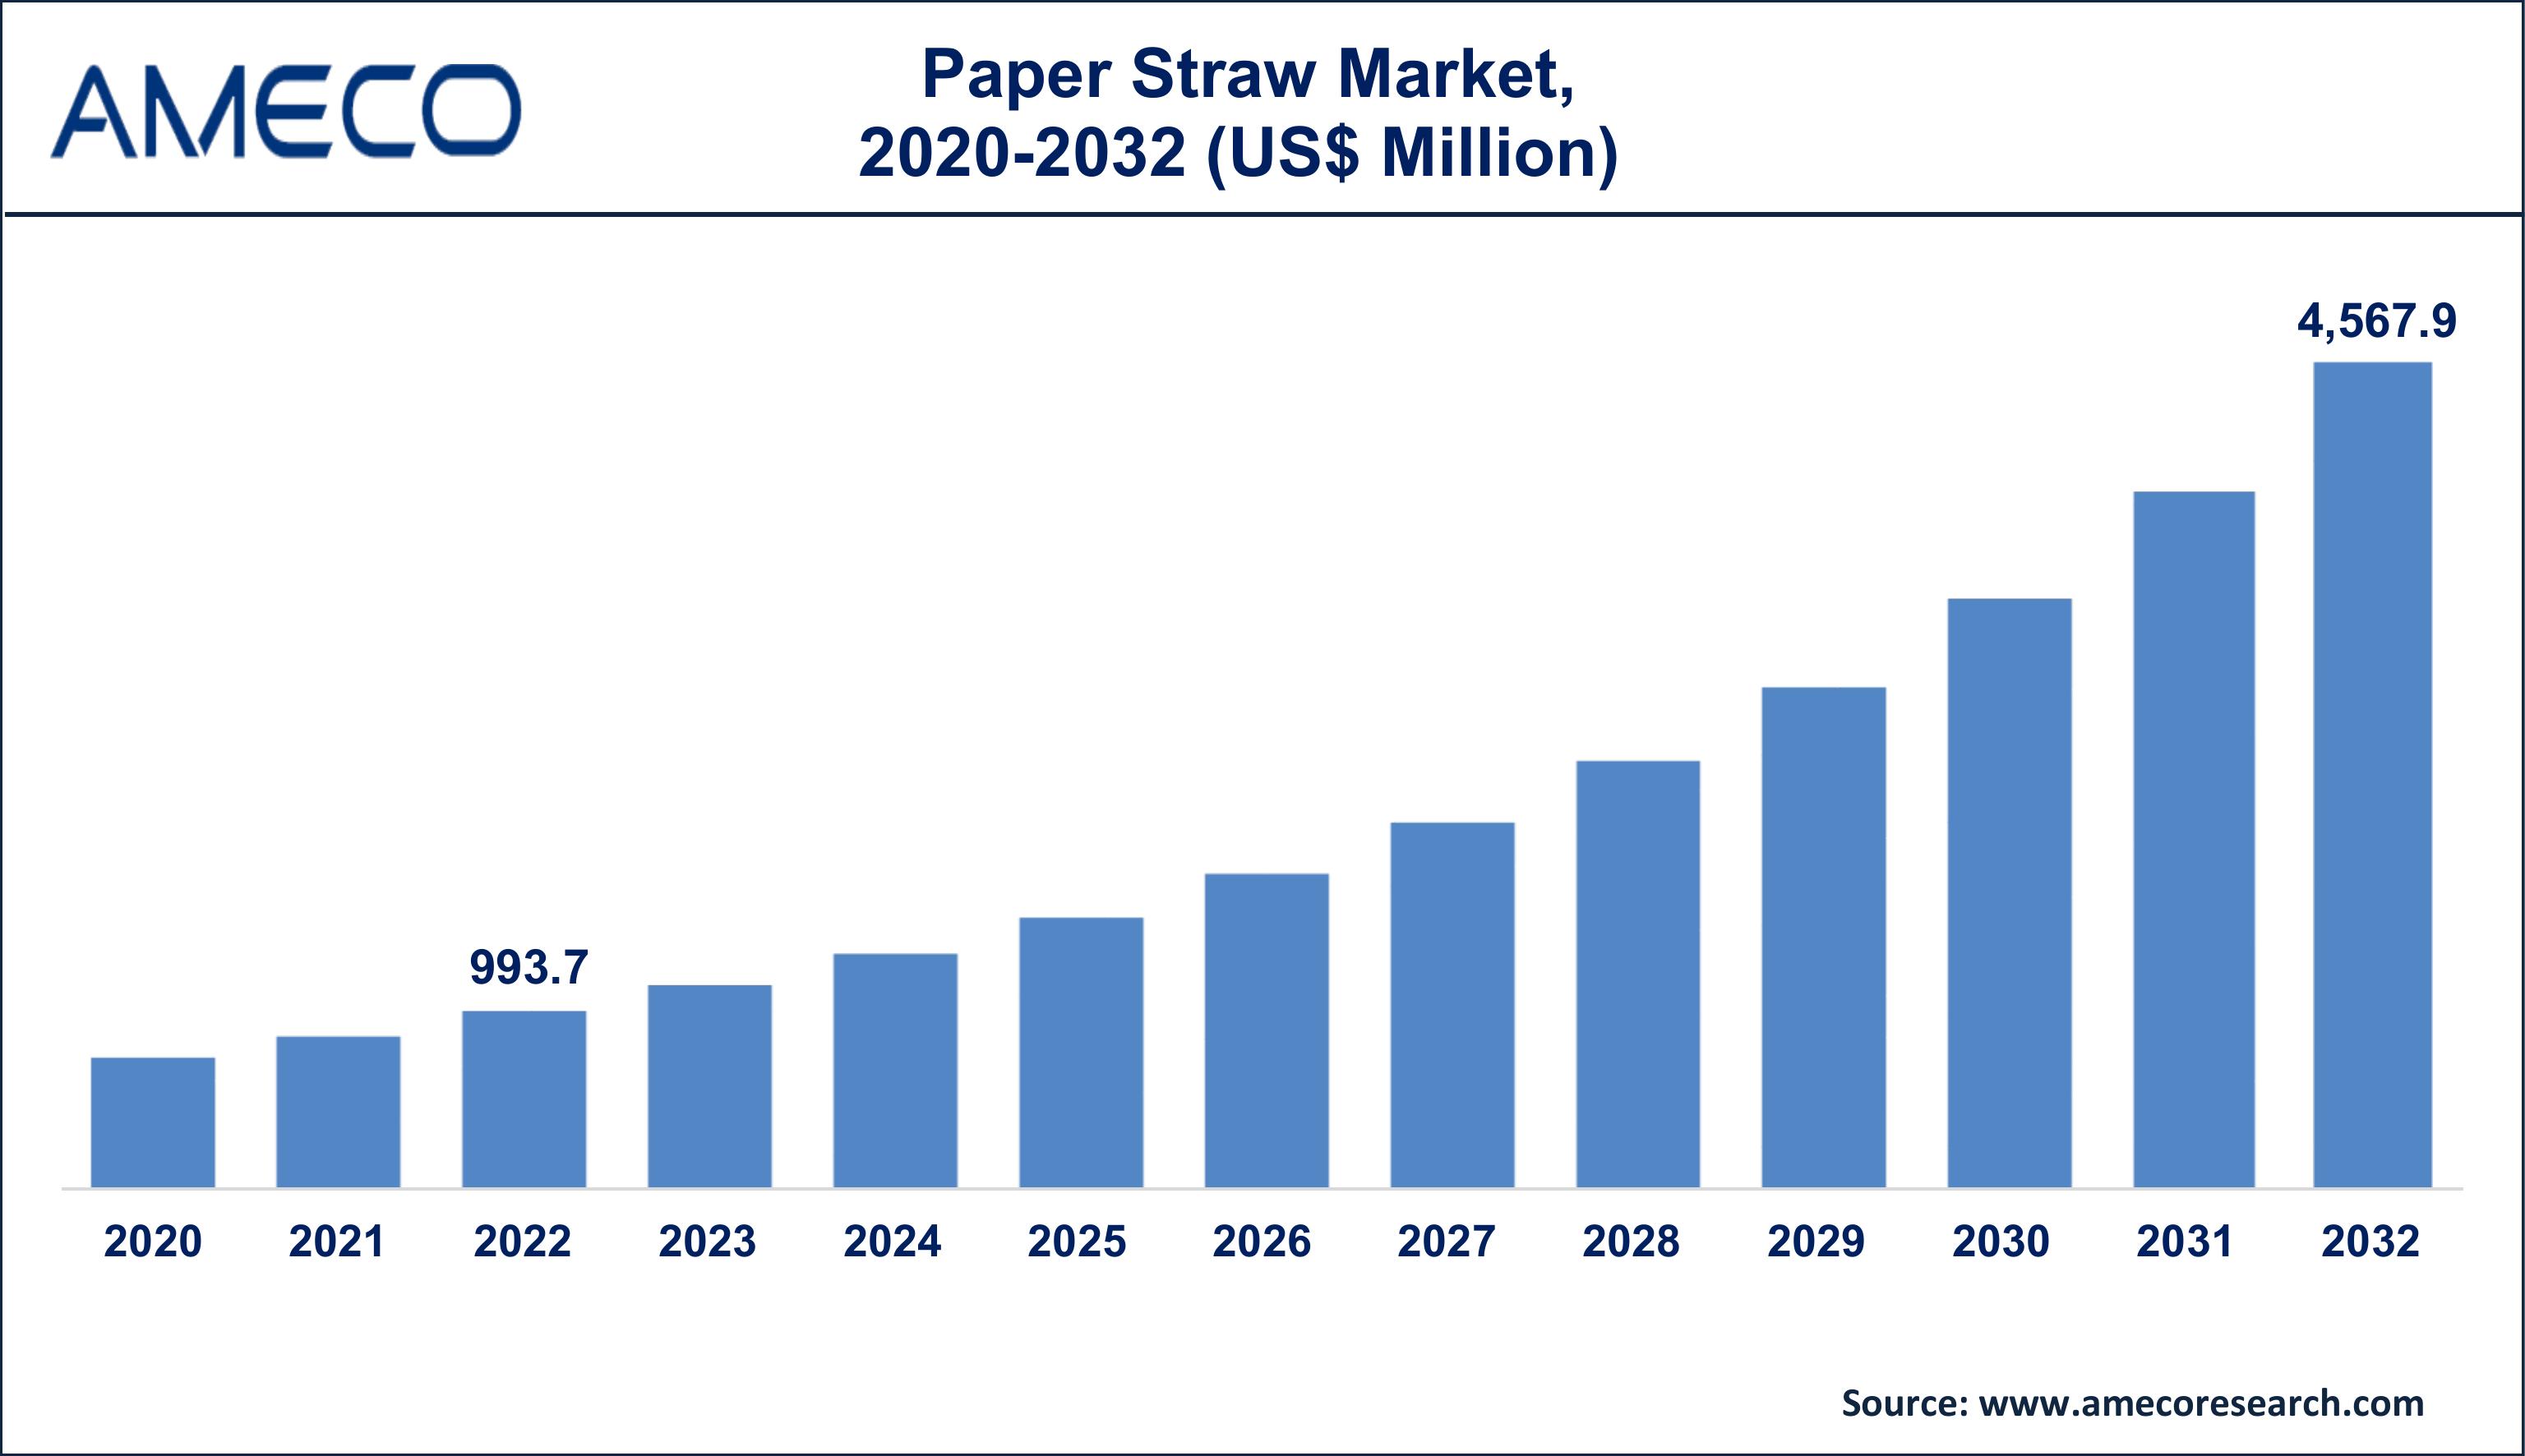 Paper Straw Market Dynamics